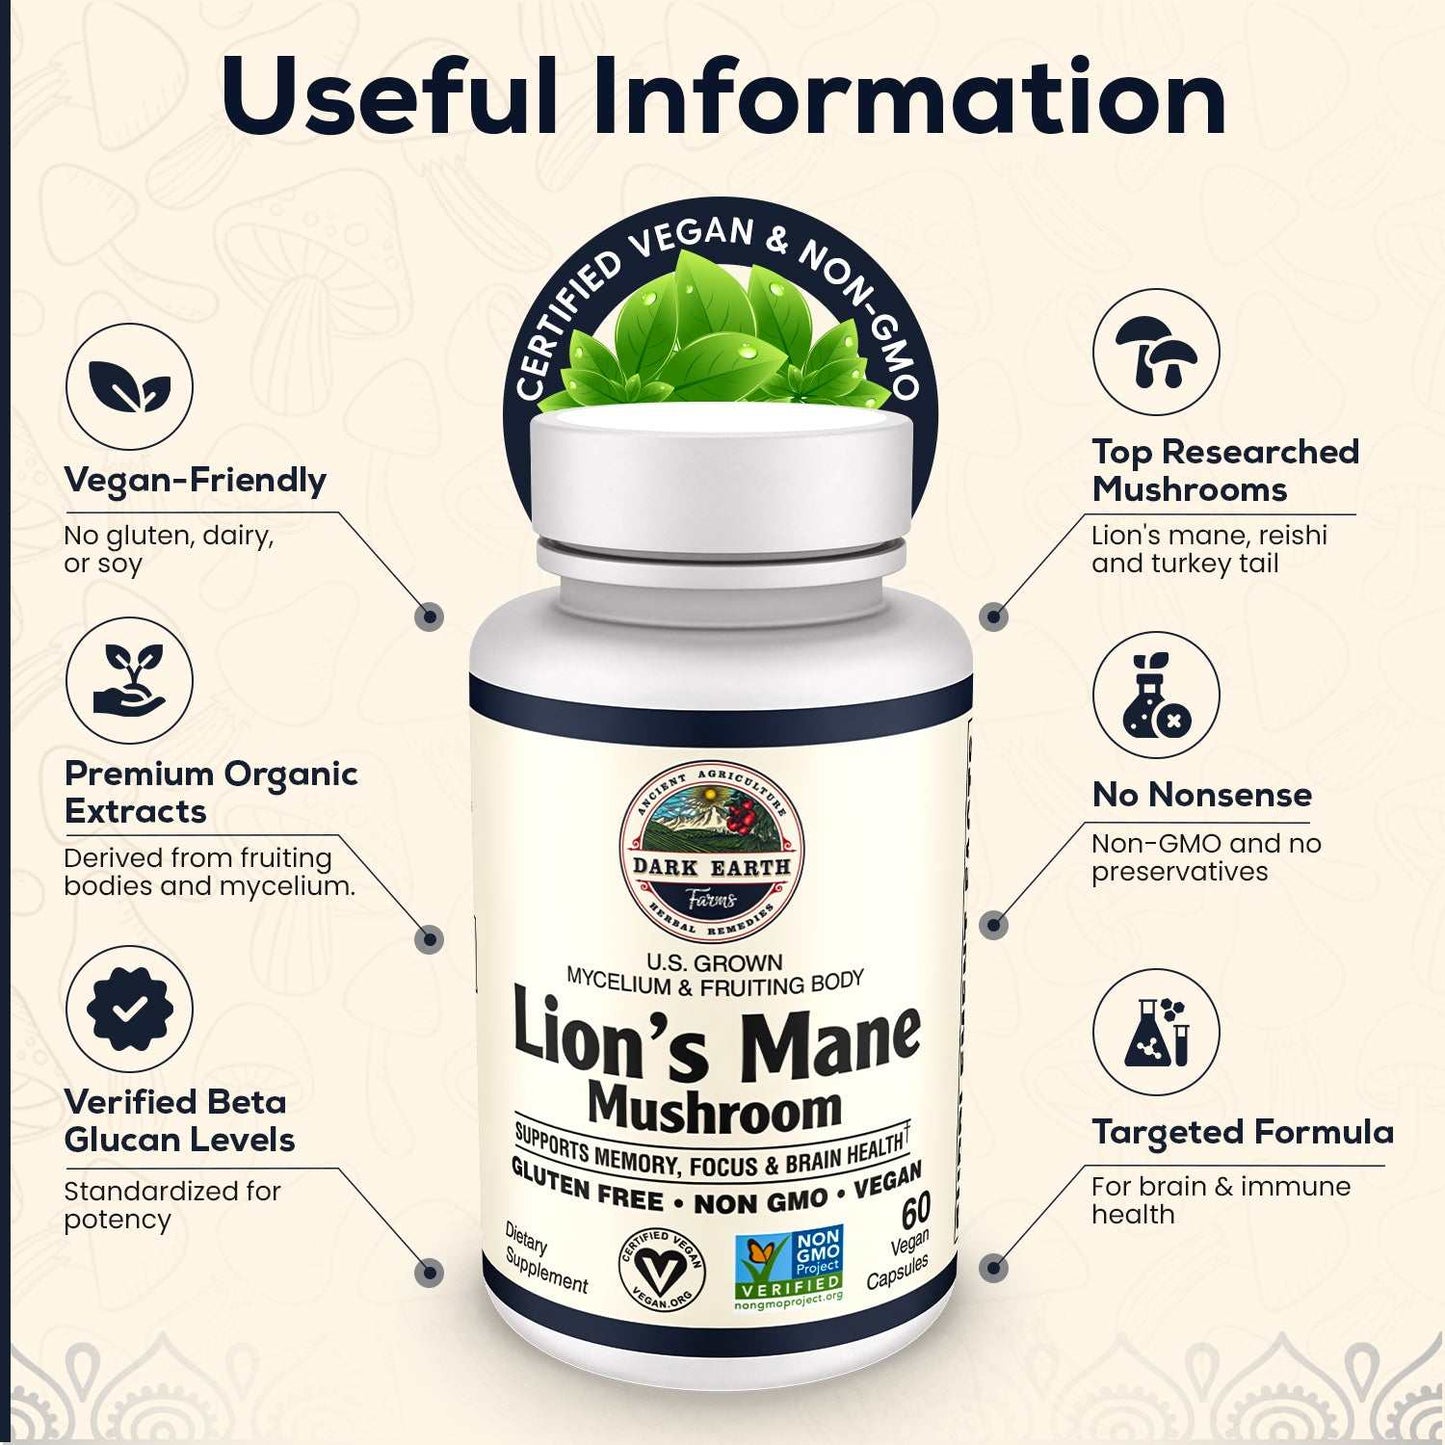 Dark Earth Farms Organic Lions Mane Mushroom Supplement – 60Pcs Vegan Capsules – Immune Support Supplement with Lions Mane Mushroom Powder – Non-GMO, Gluten Free Brain Supplement